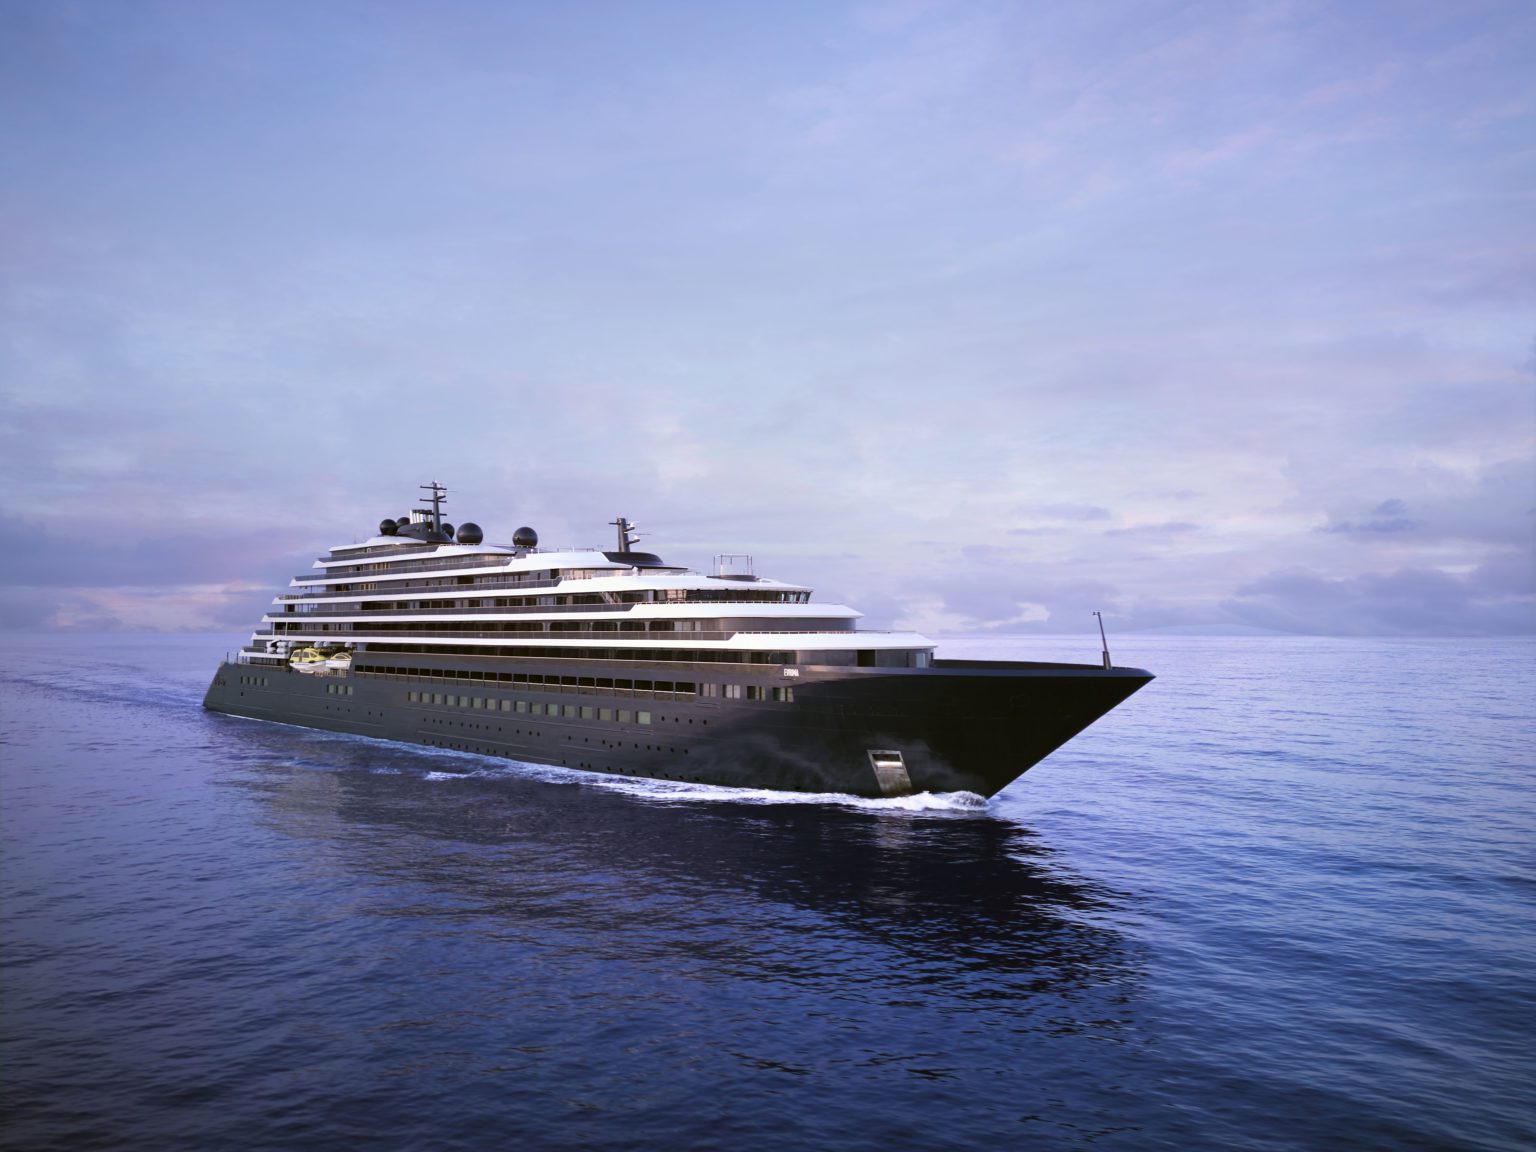 RitzCarlton's First Luxury Cruise 'Yacht' Sets Sail